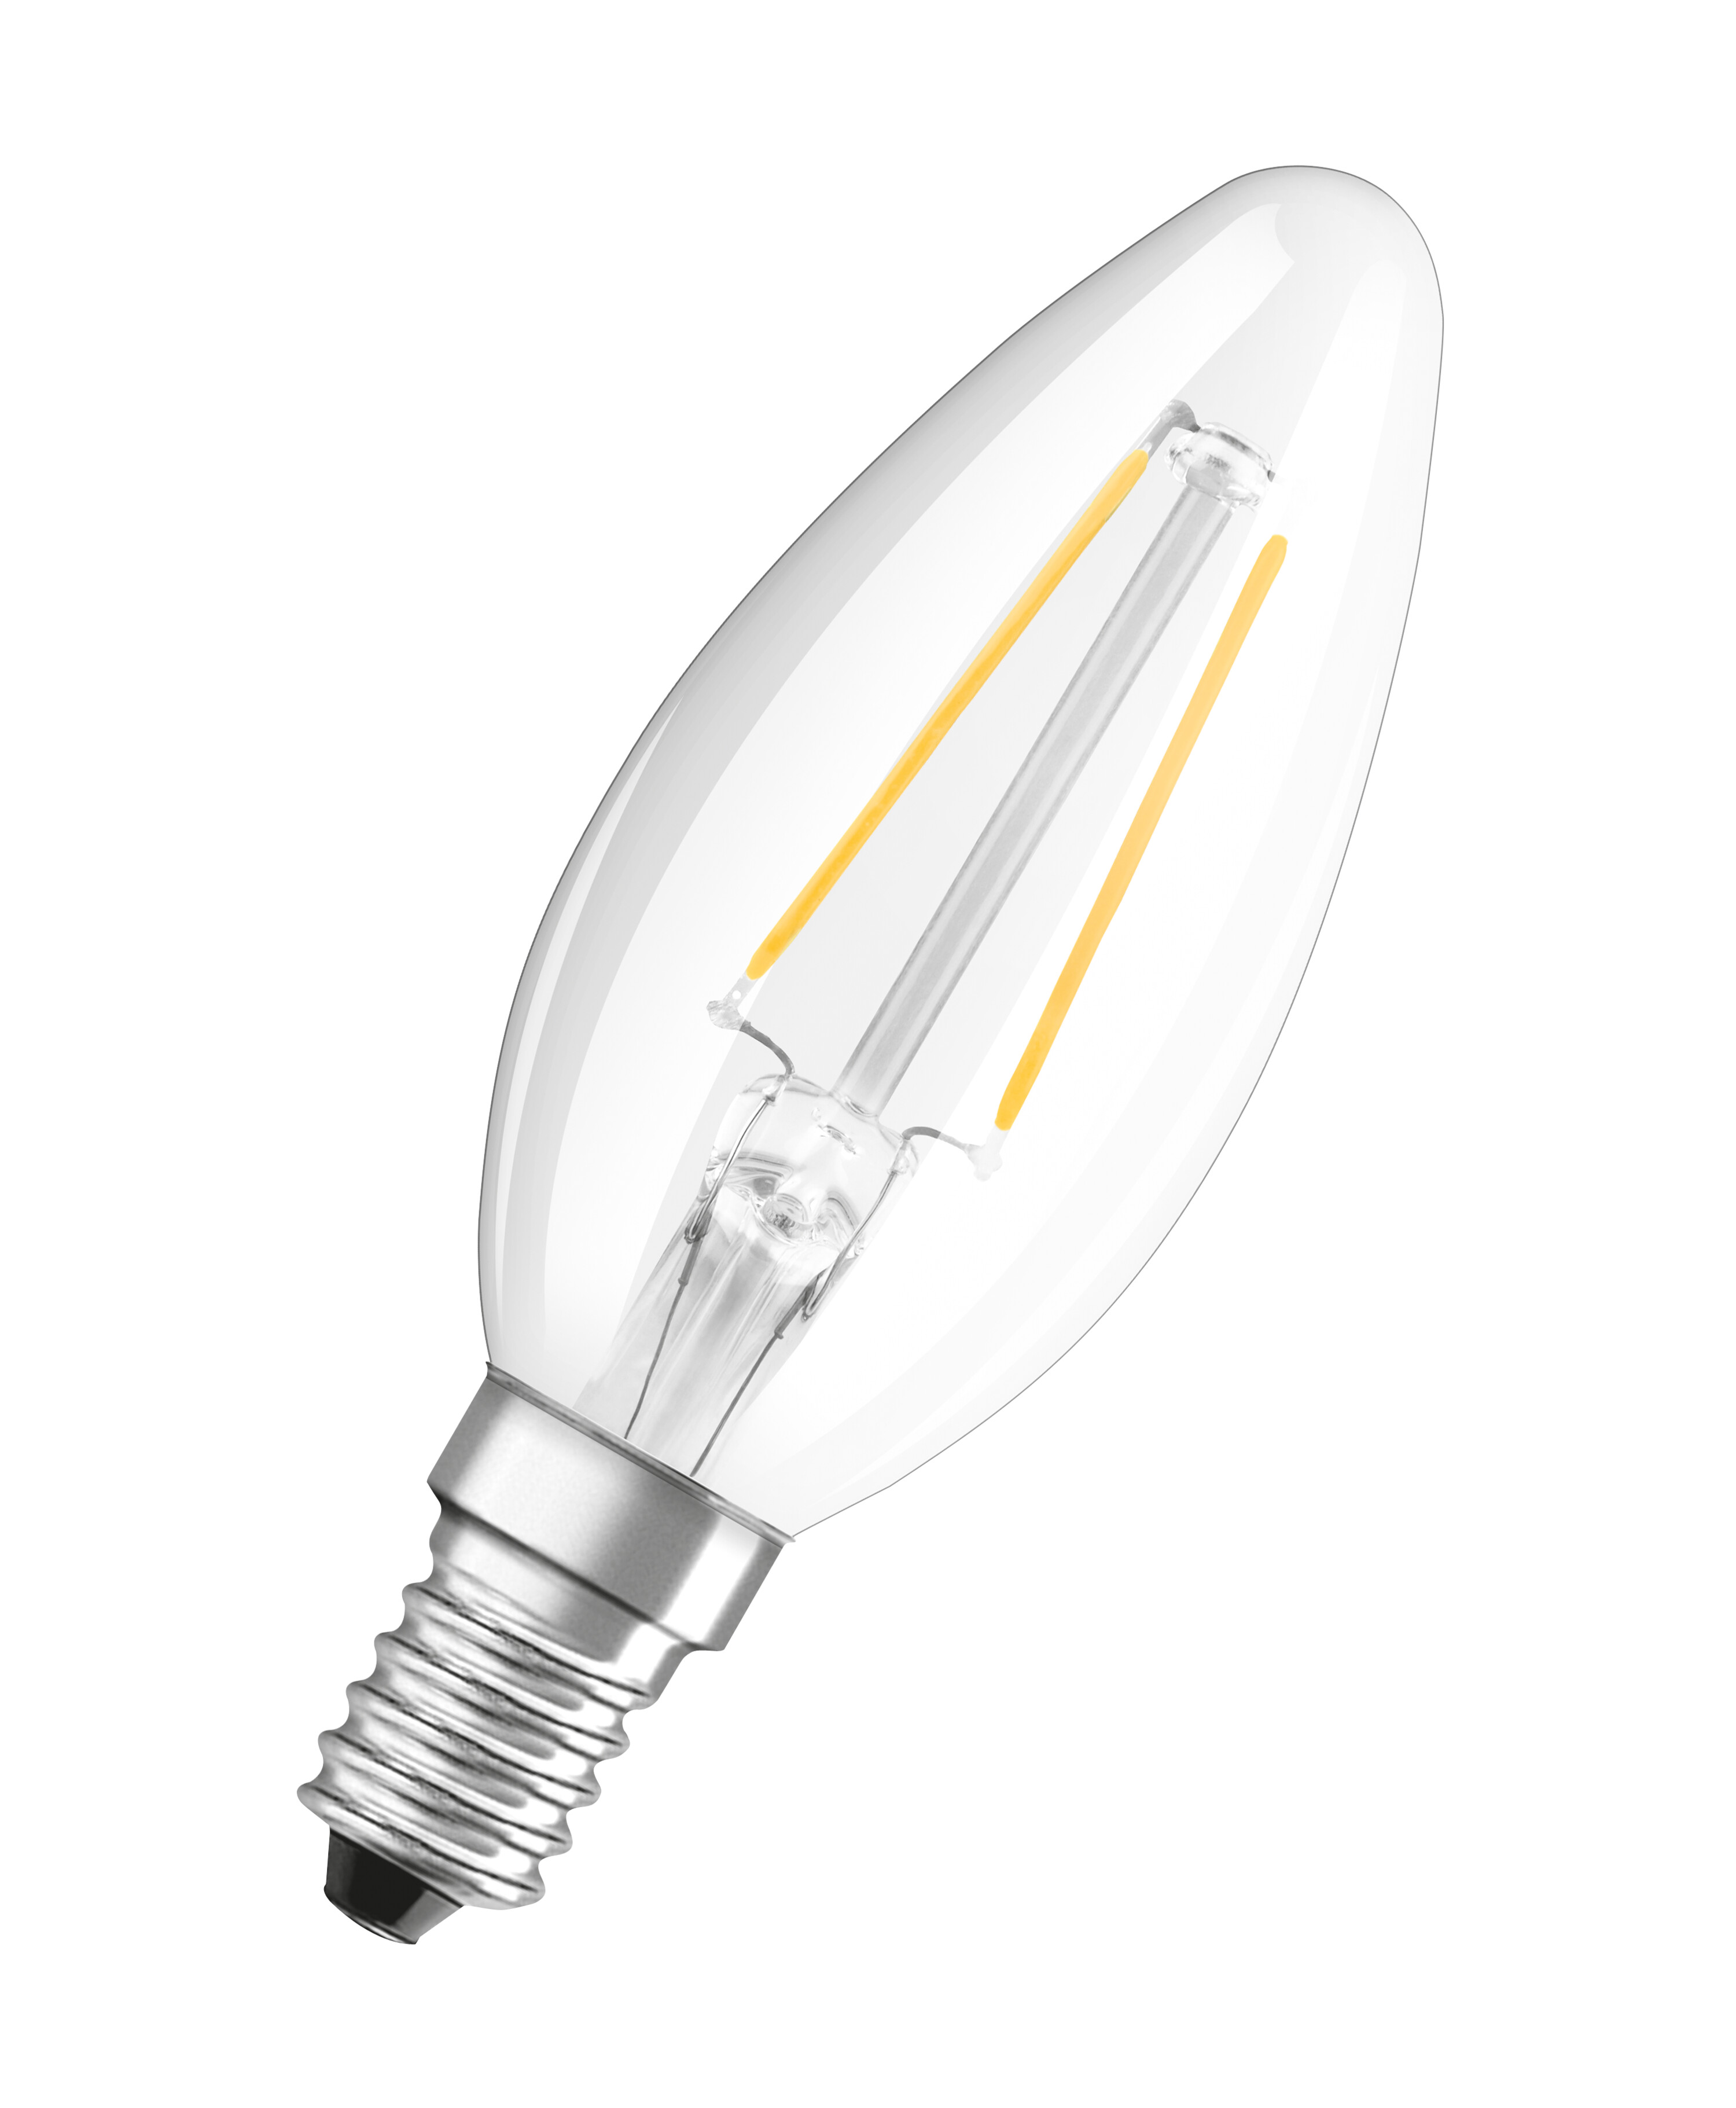 250 Lumen Retrofit LED LED OSRAM  CLASSIC Kaltweiß B Lampe